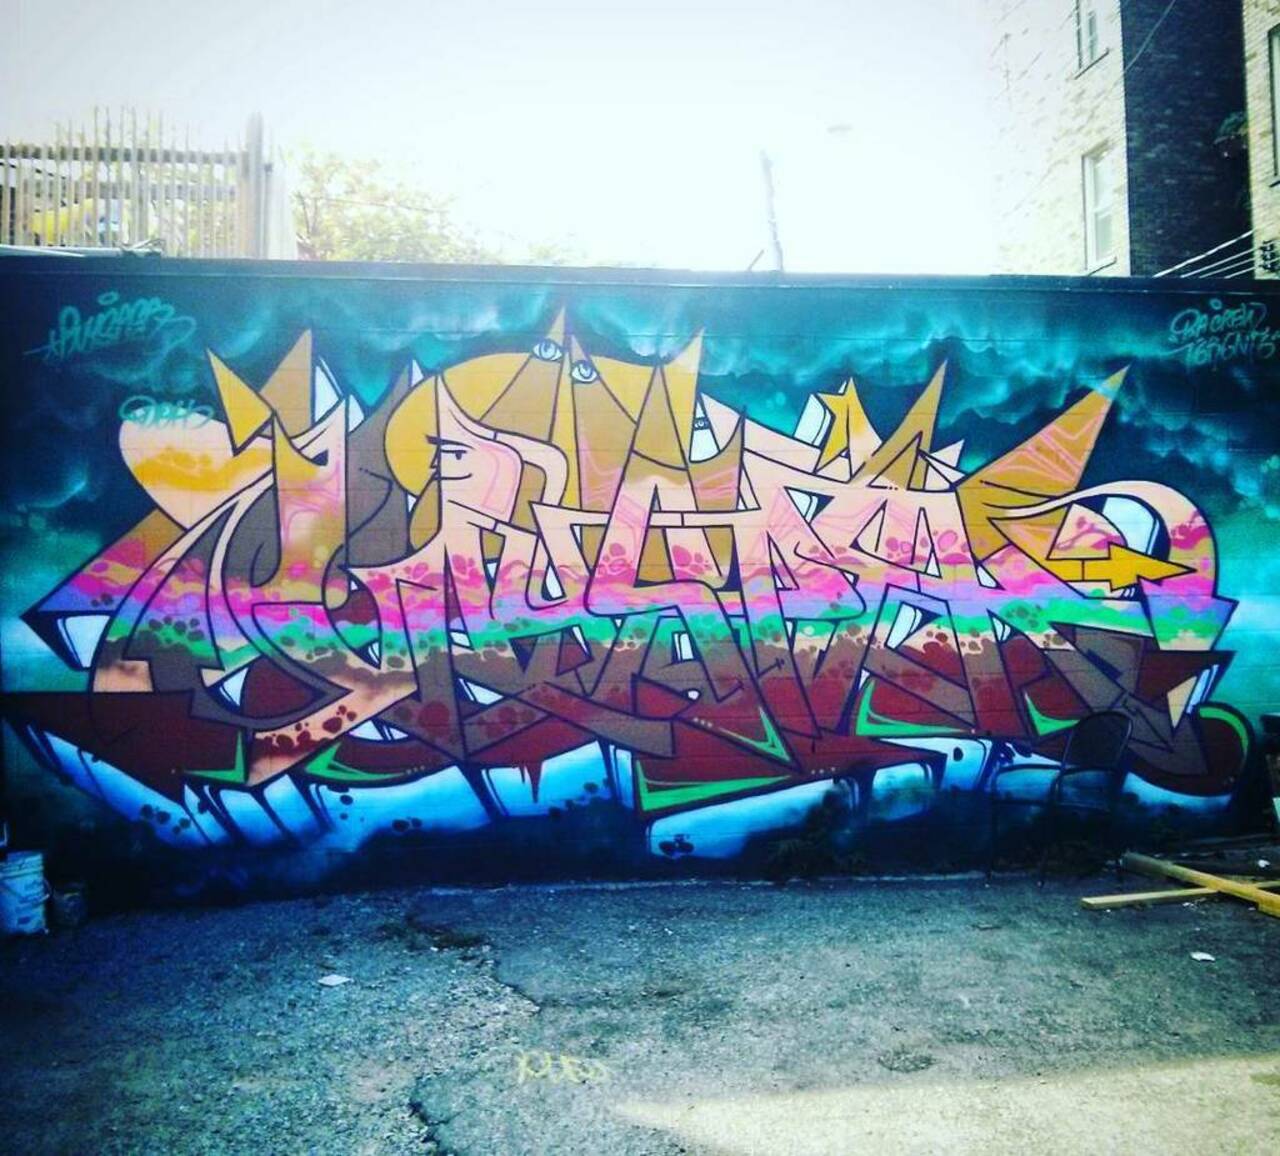 RT @artpushr: via #graff_n_such "http://bit.ly/1JPaO77" #graffiti #streetart http://t.co/NtsfkNszYP